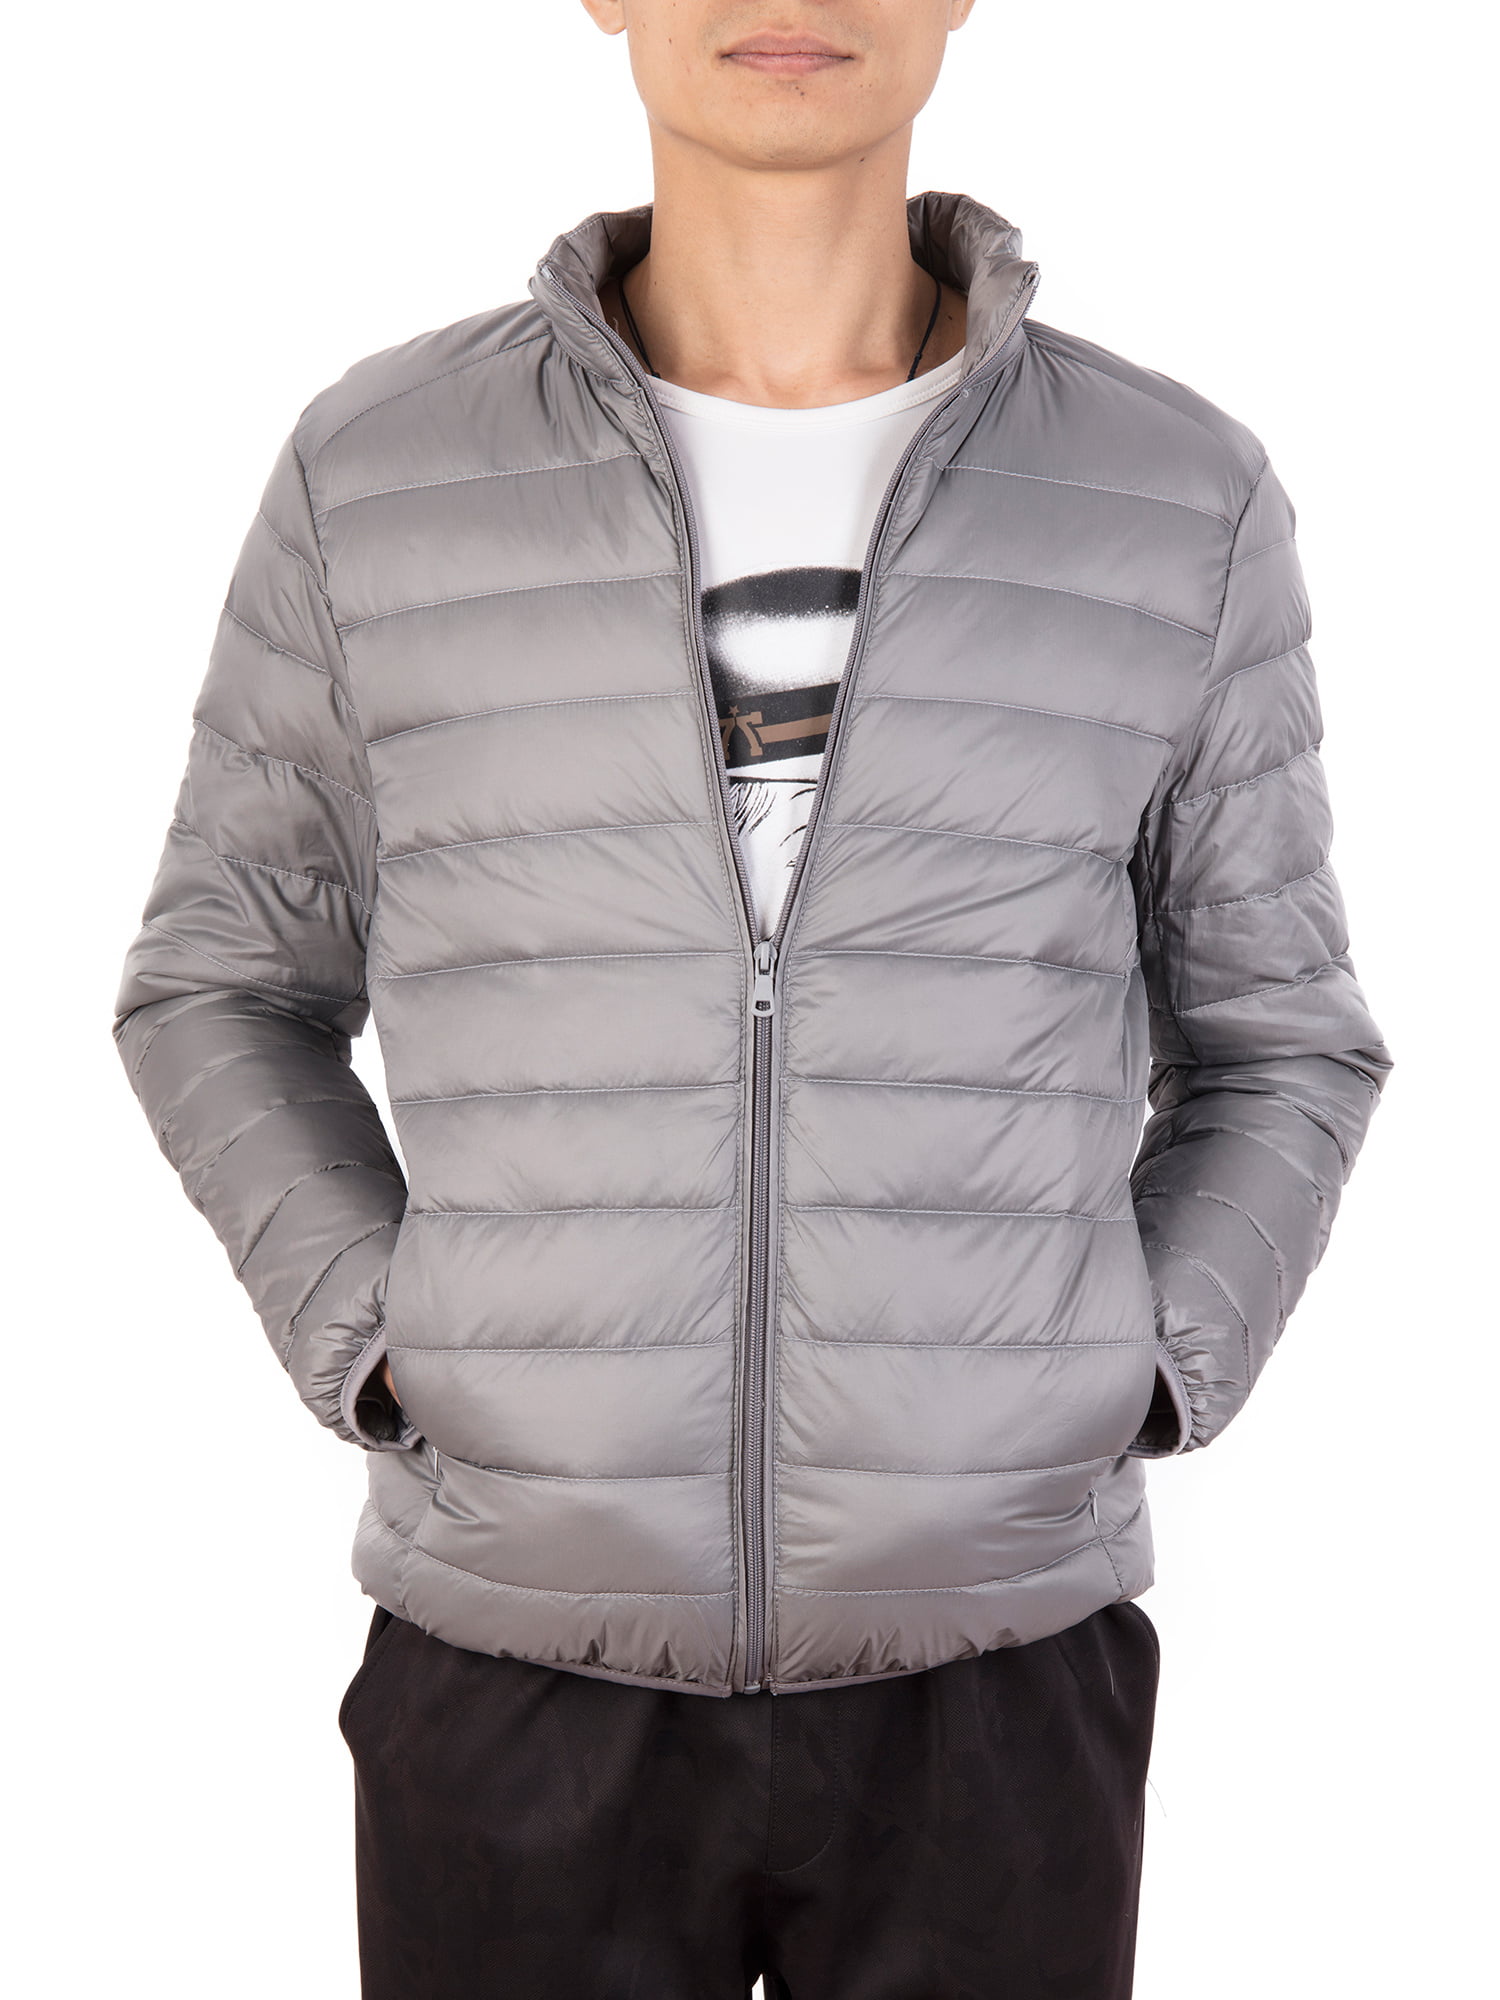 Generic Mens Down Jacket Packable Lightweight Puffer Winter Coat with Hood